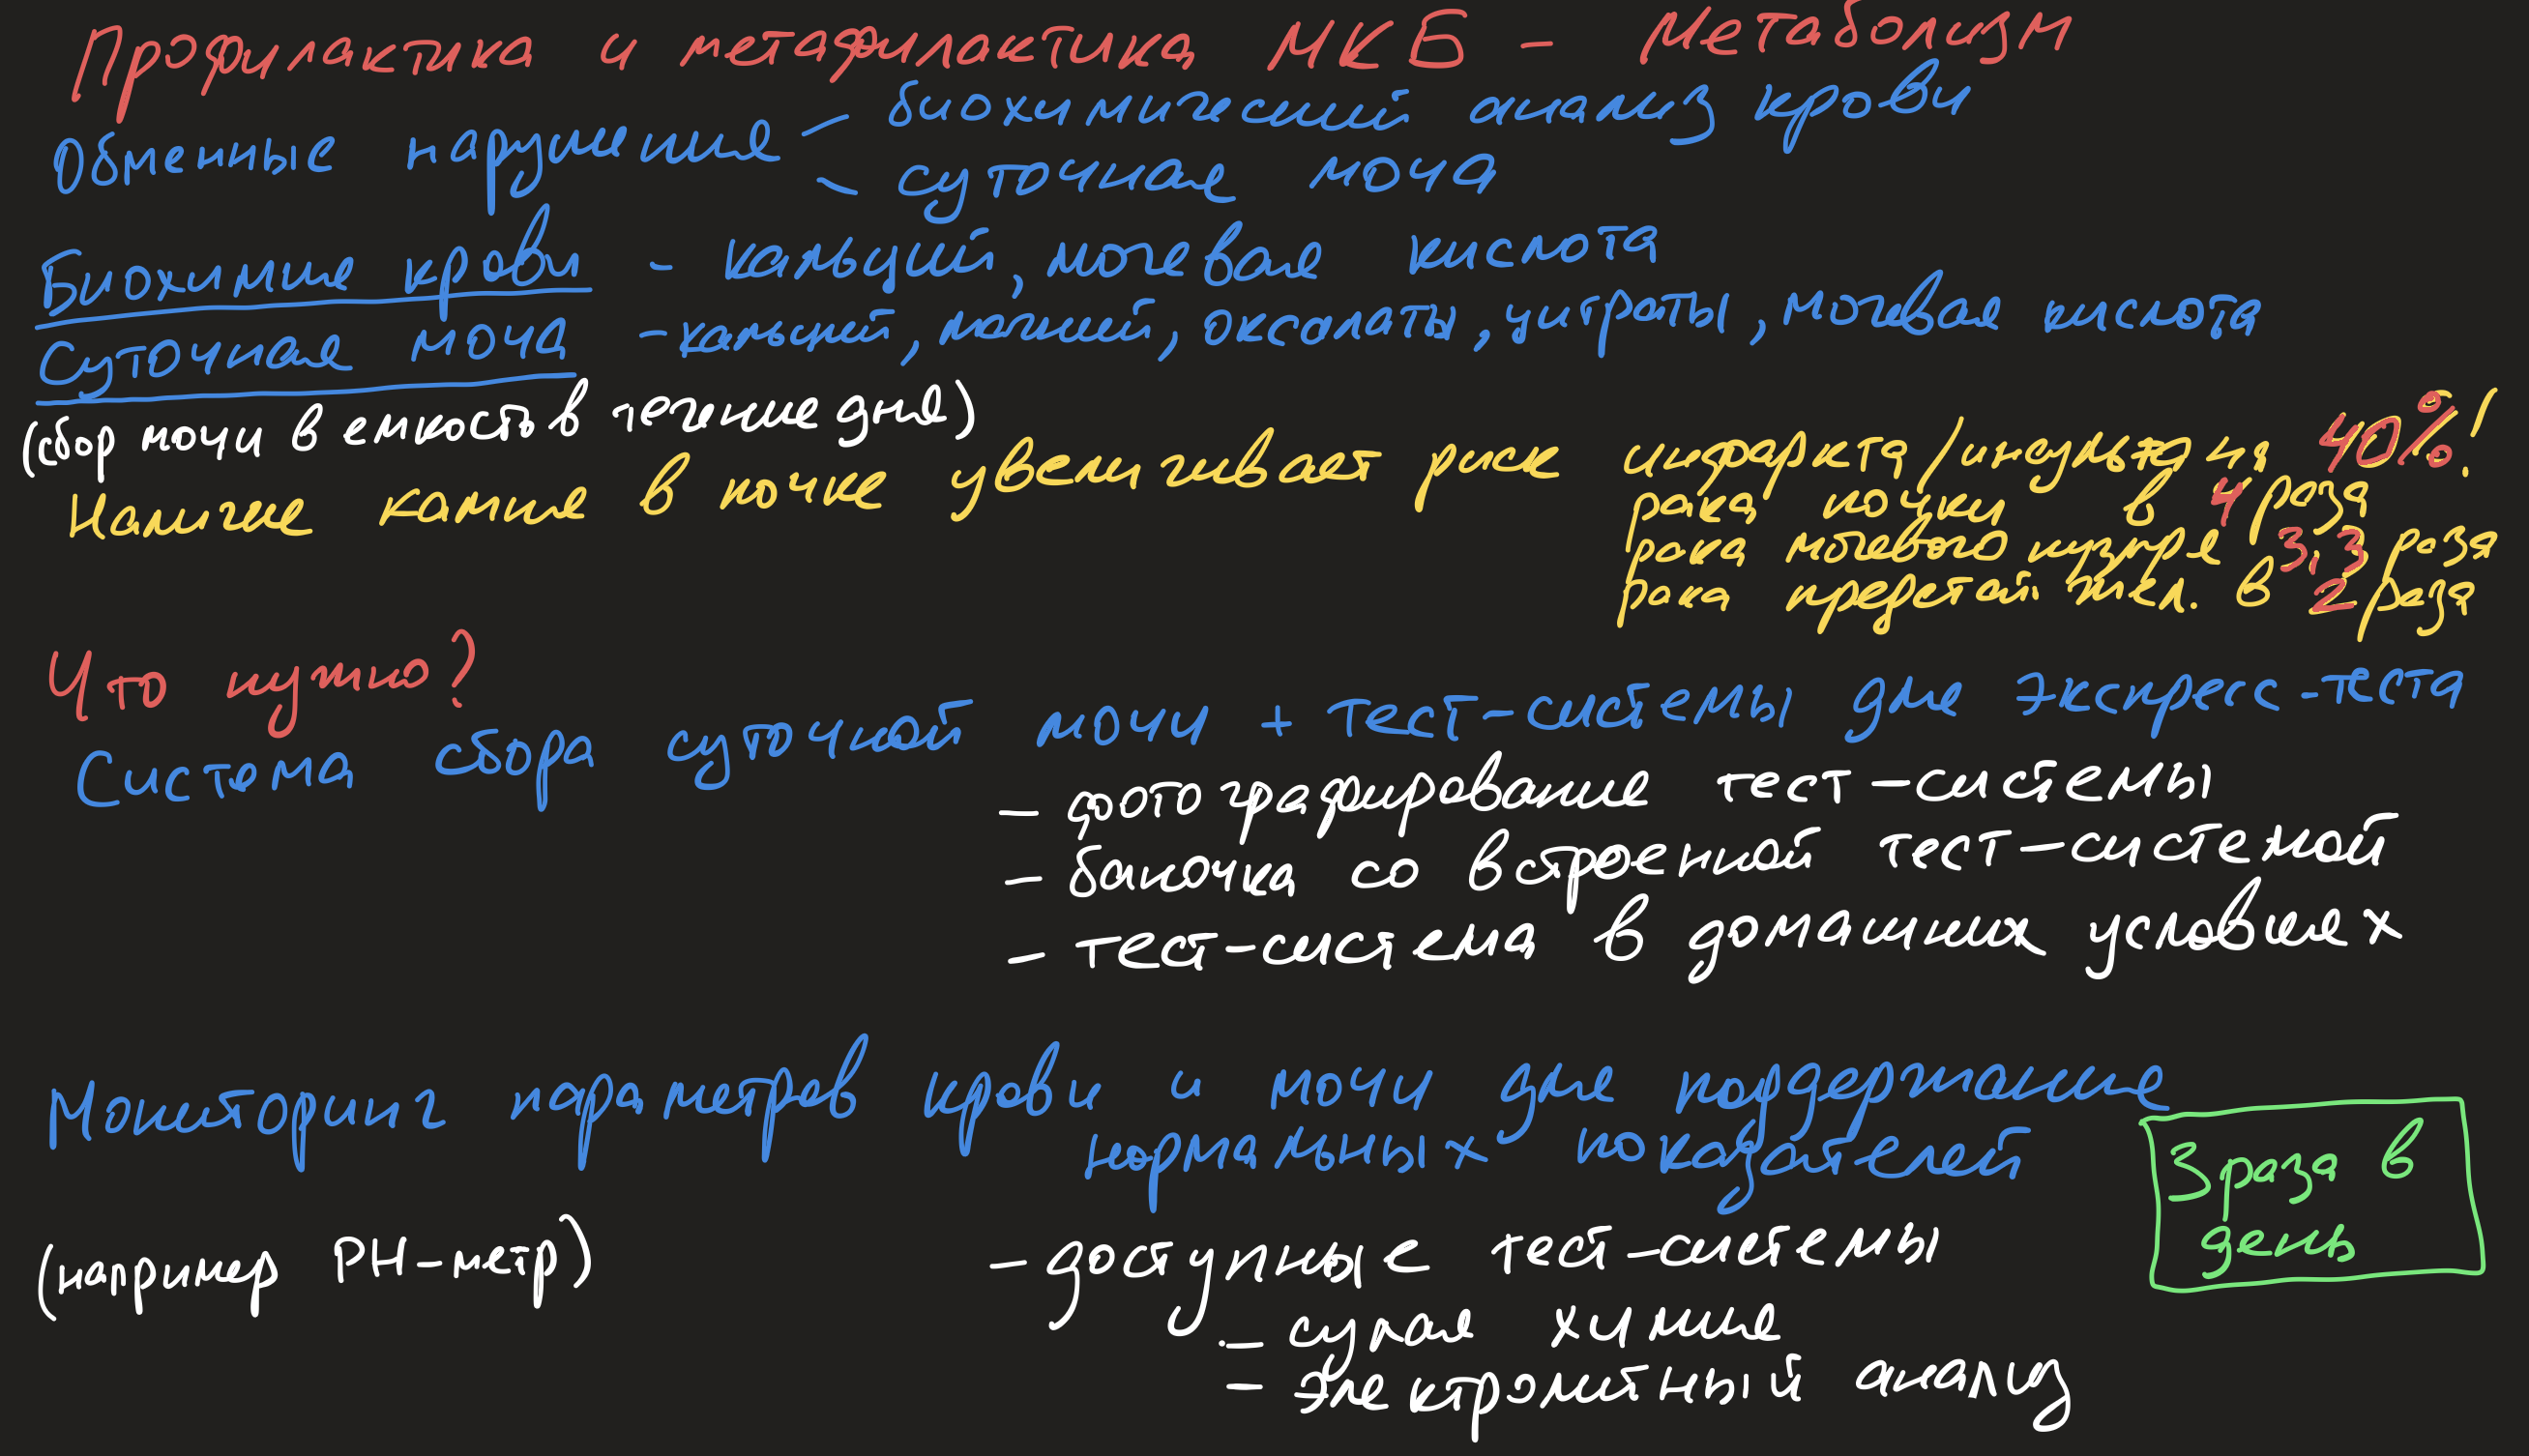 Профилактика и метафилактика мочекаменной болезни. Метаболизм